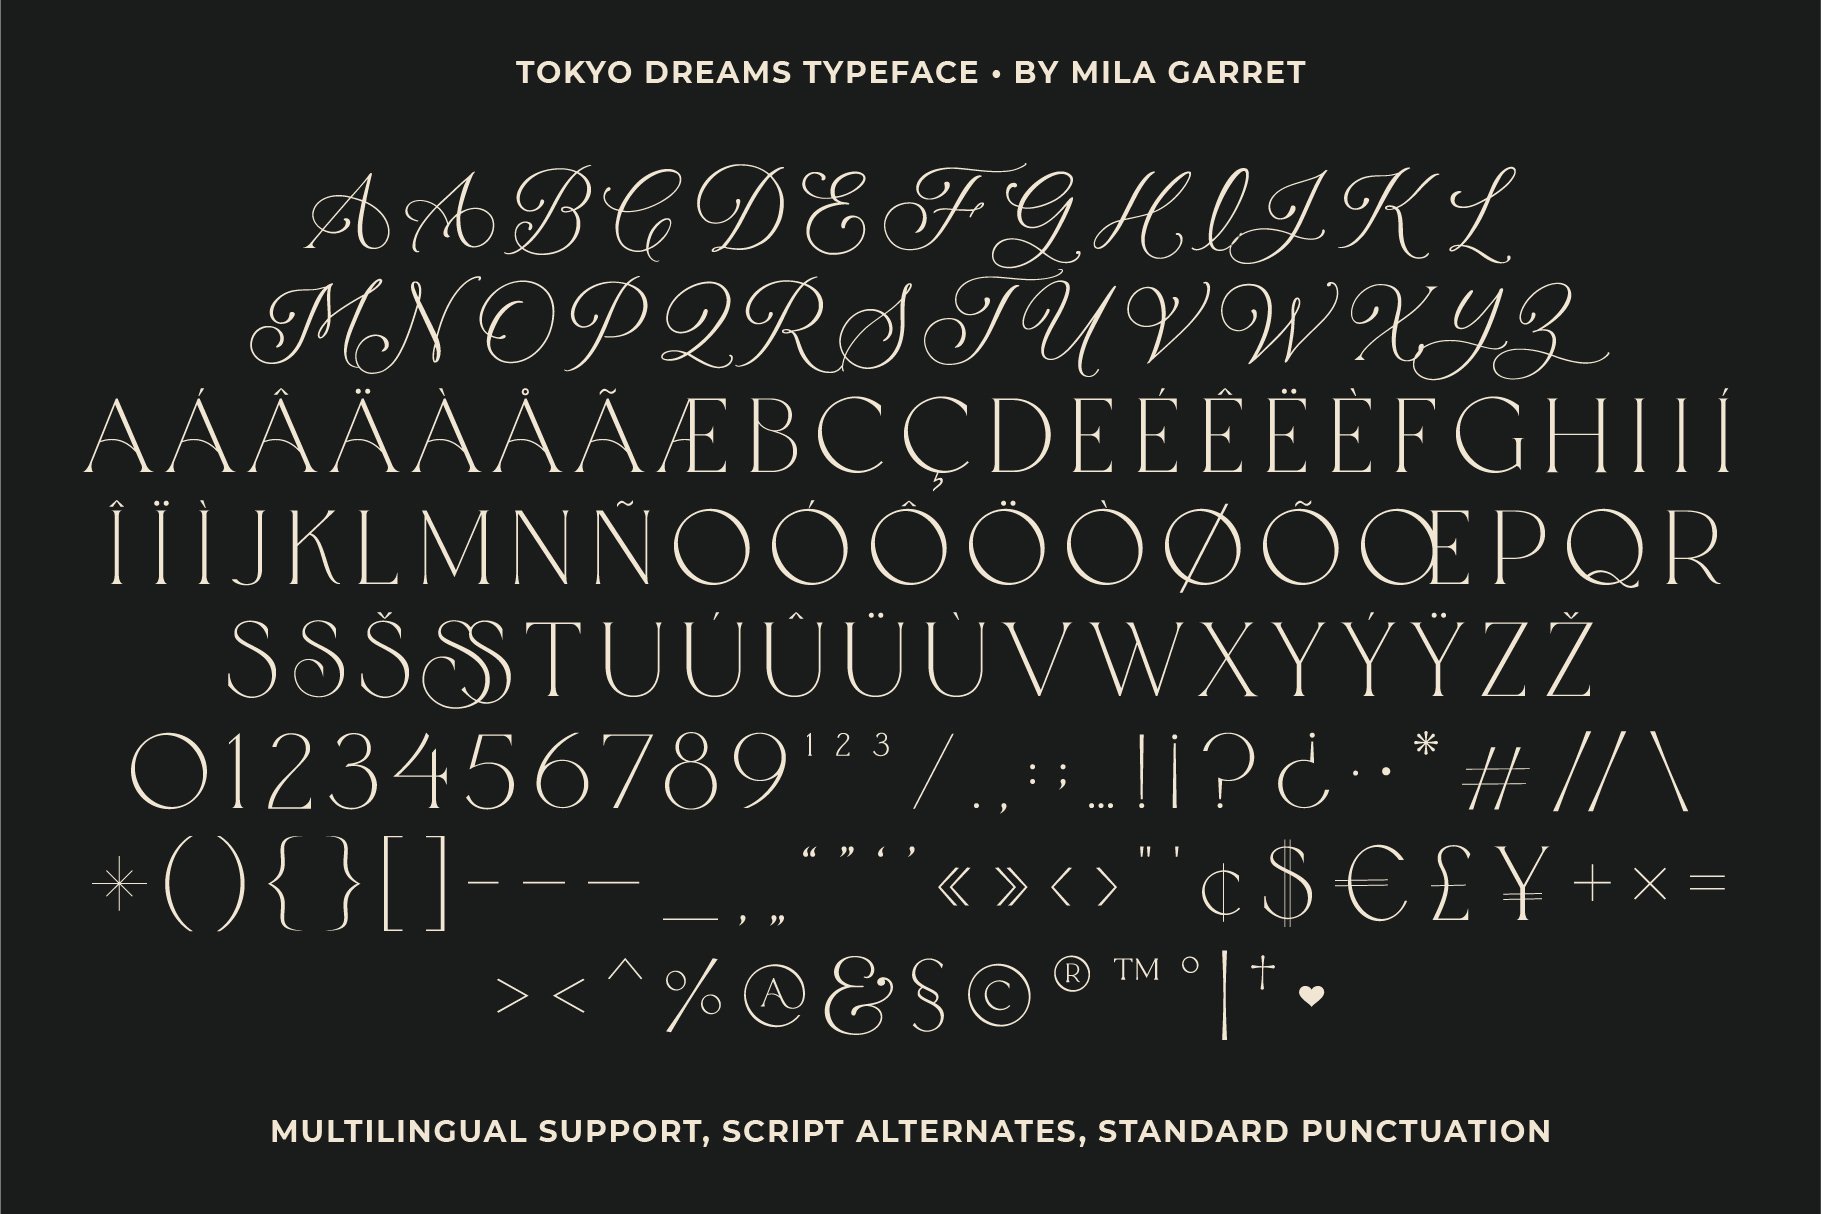 specimen display font ligature serif typography inspiration script elegant logo hybrid typeface beautiful unique trend modern custom typeface logo wordmark tokyo dreams mila garret 681